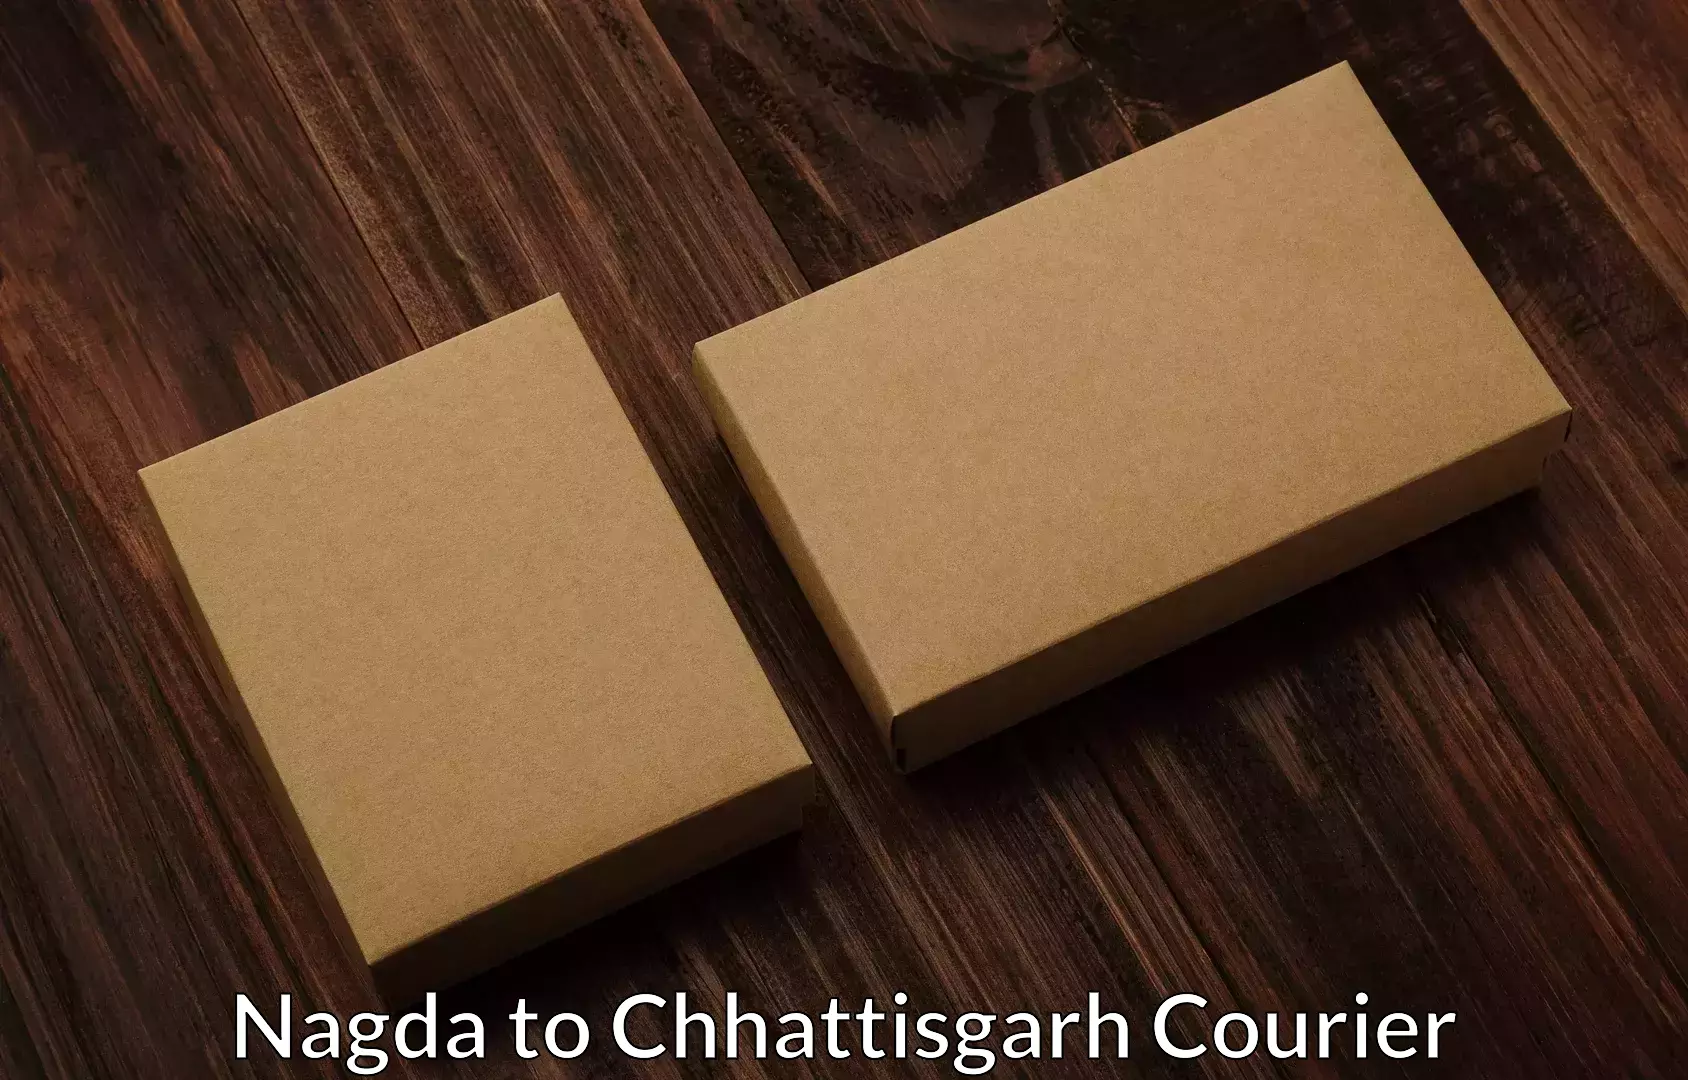 Full-service movers Nagda to Korea Chhattisgarh